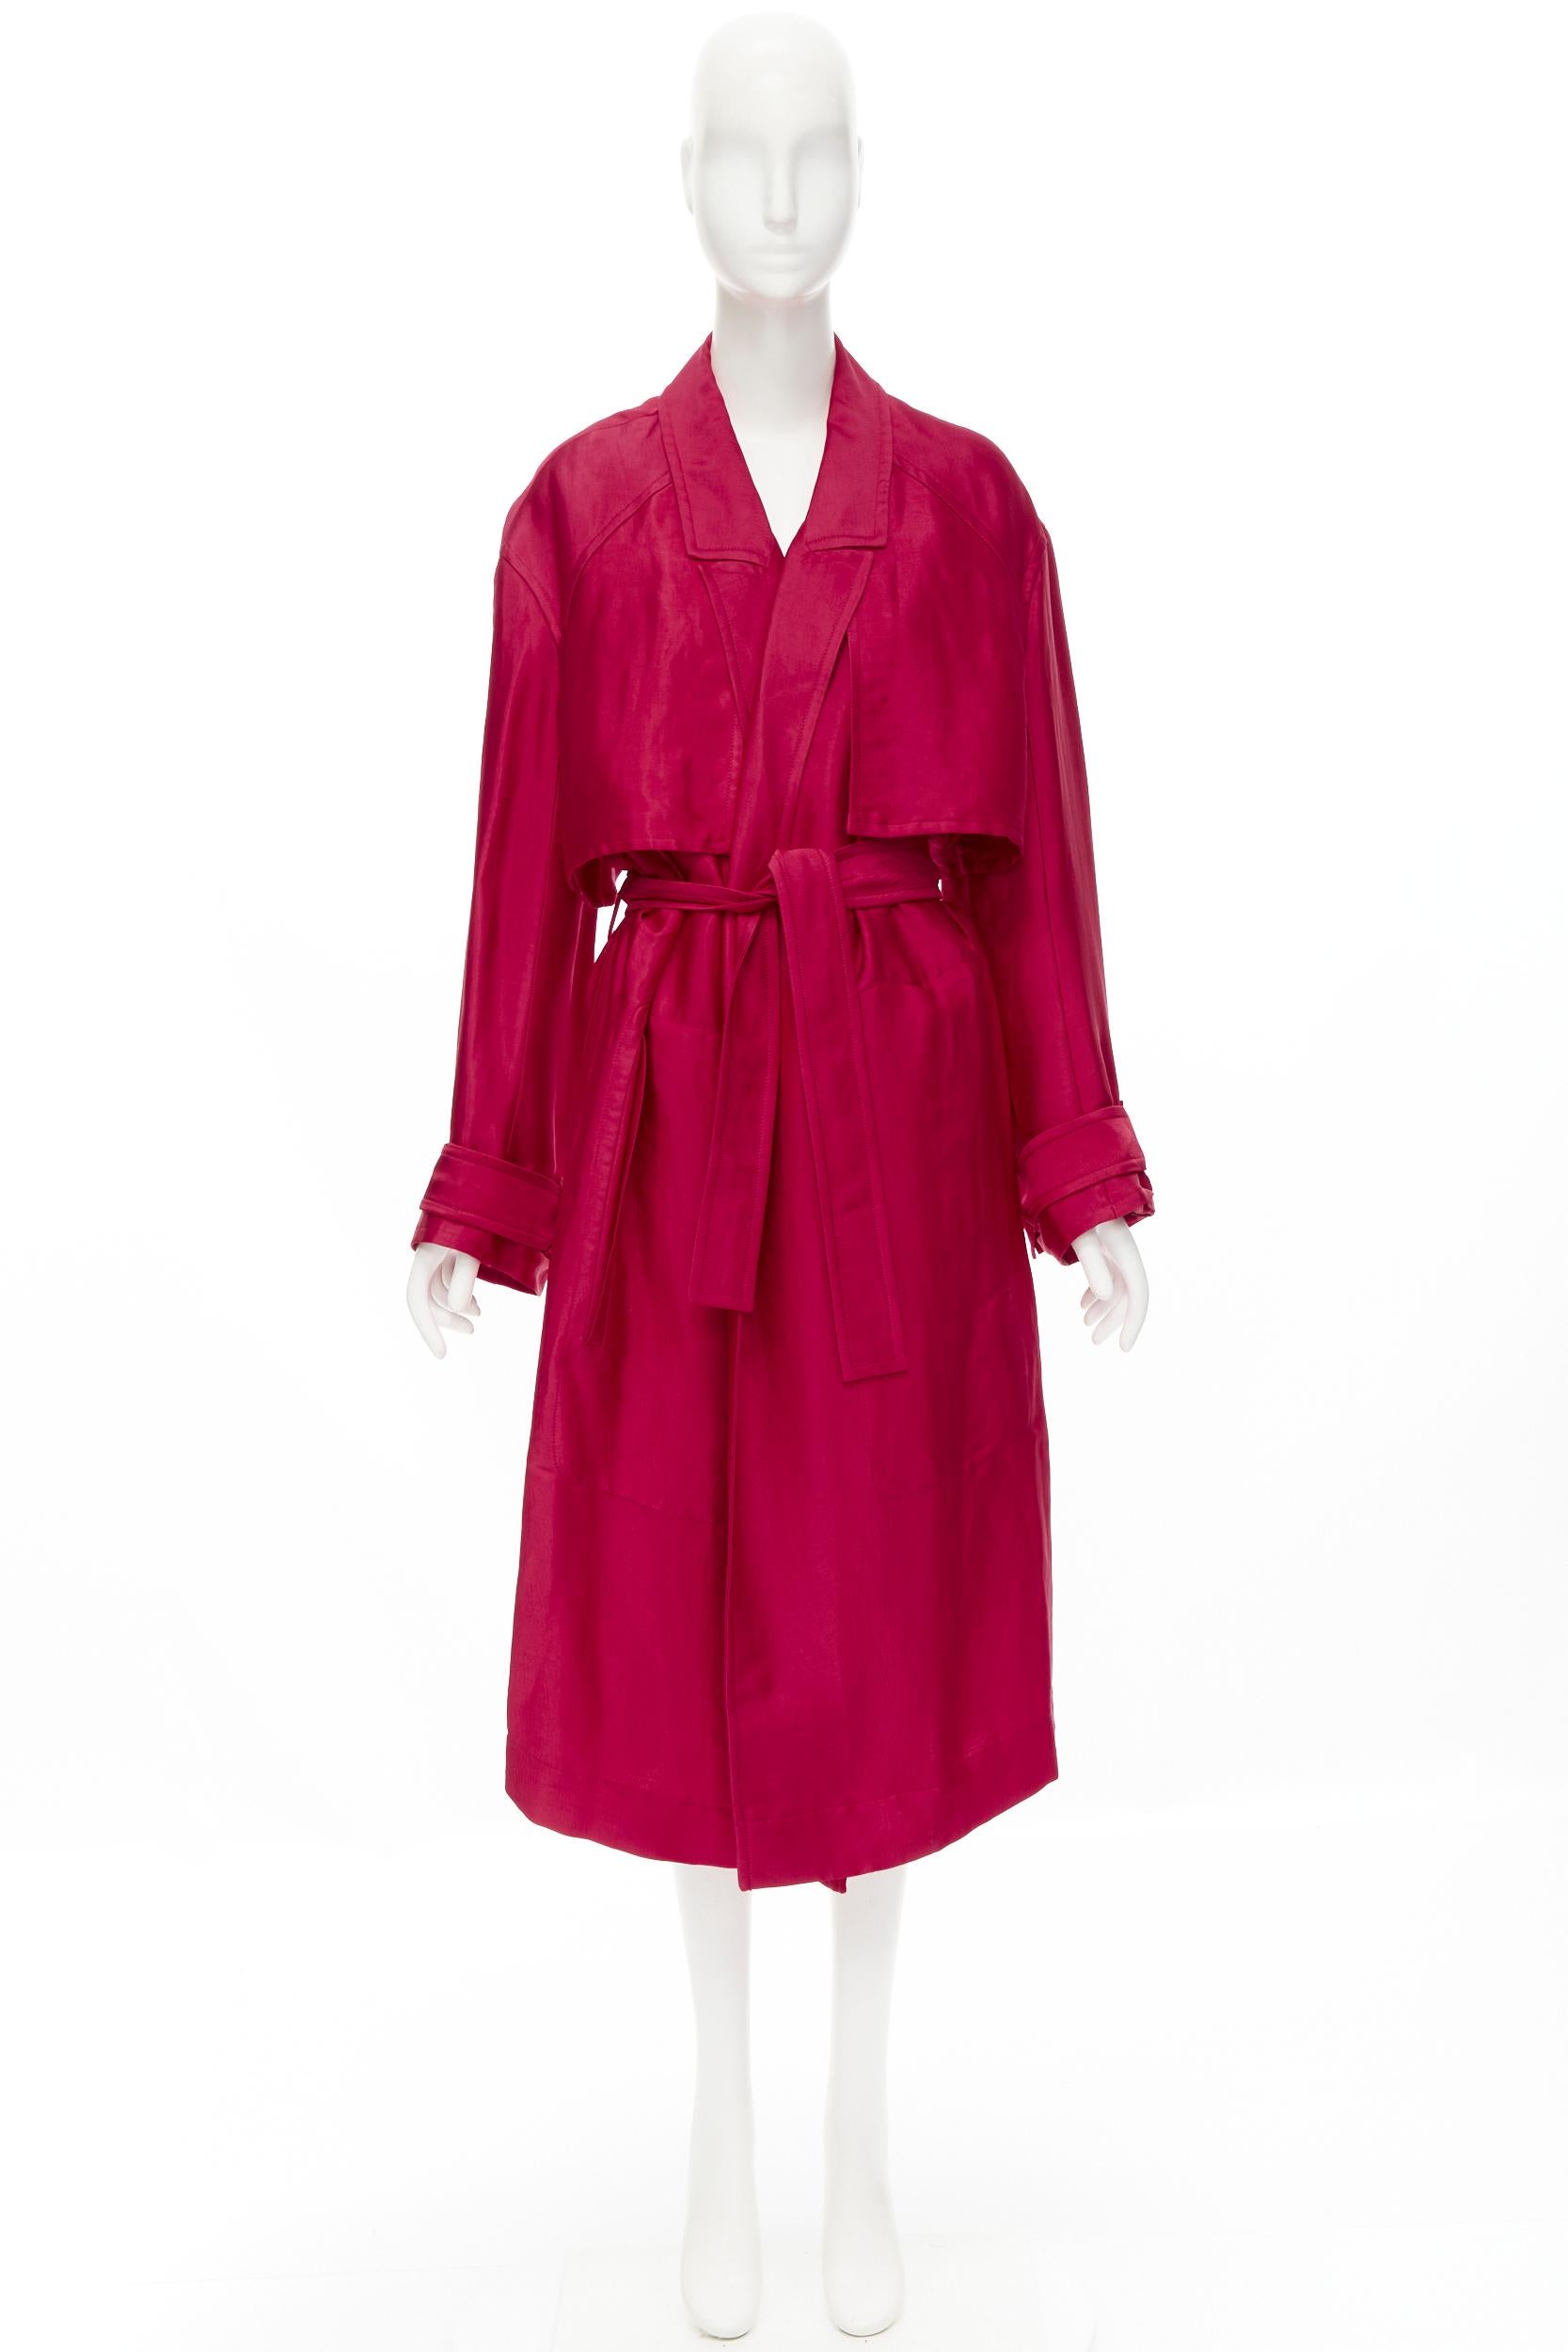 HAIDER ACKERMANN Fuschia pink linen rayon flap layered robe coat FR34 XS For Sale 5